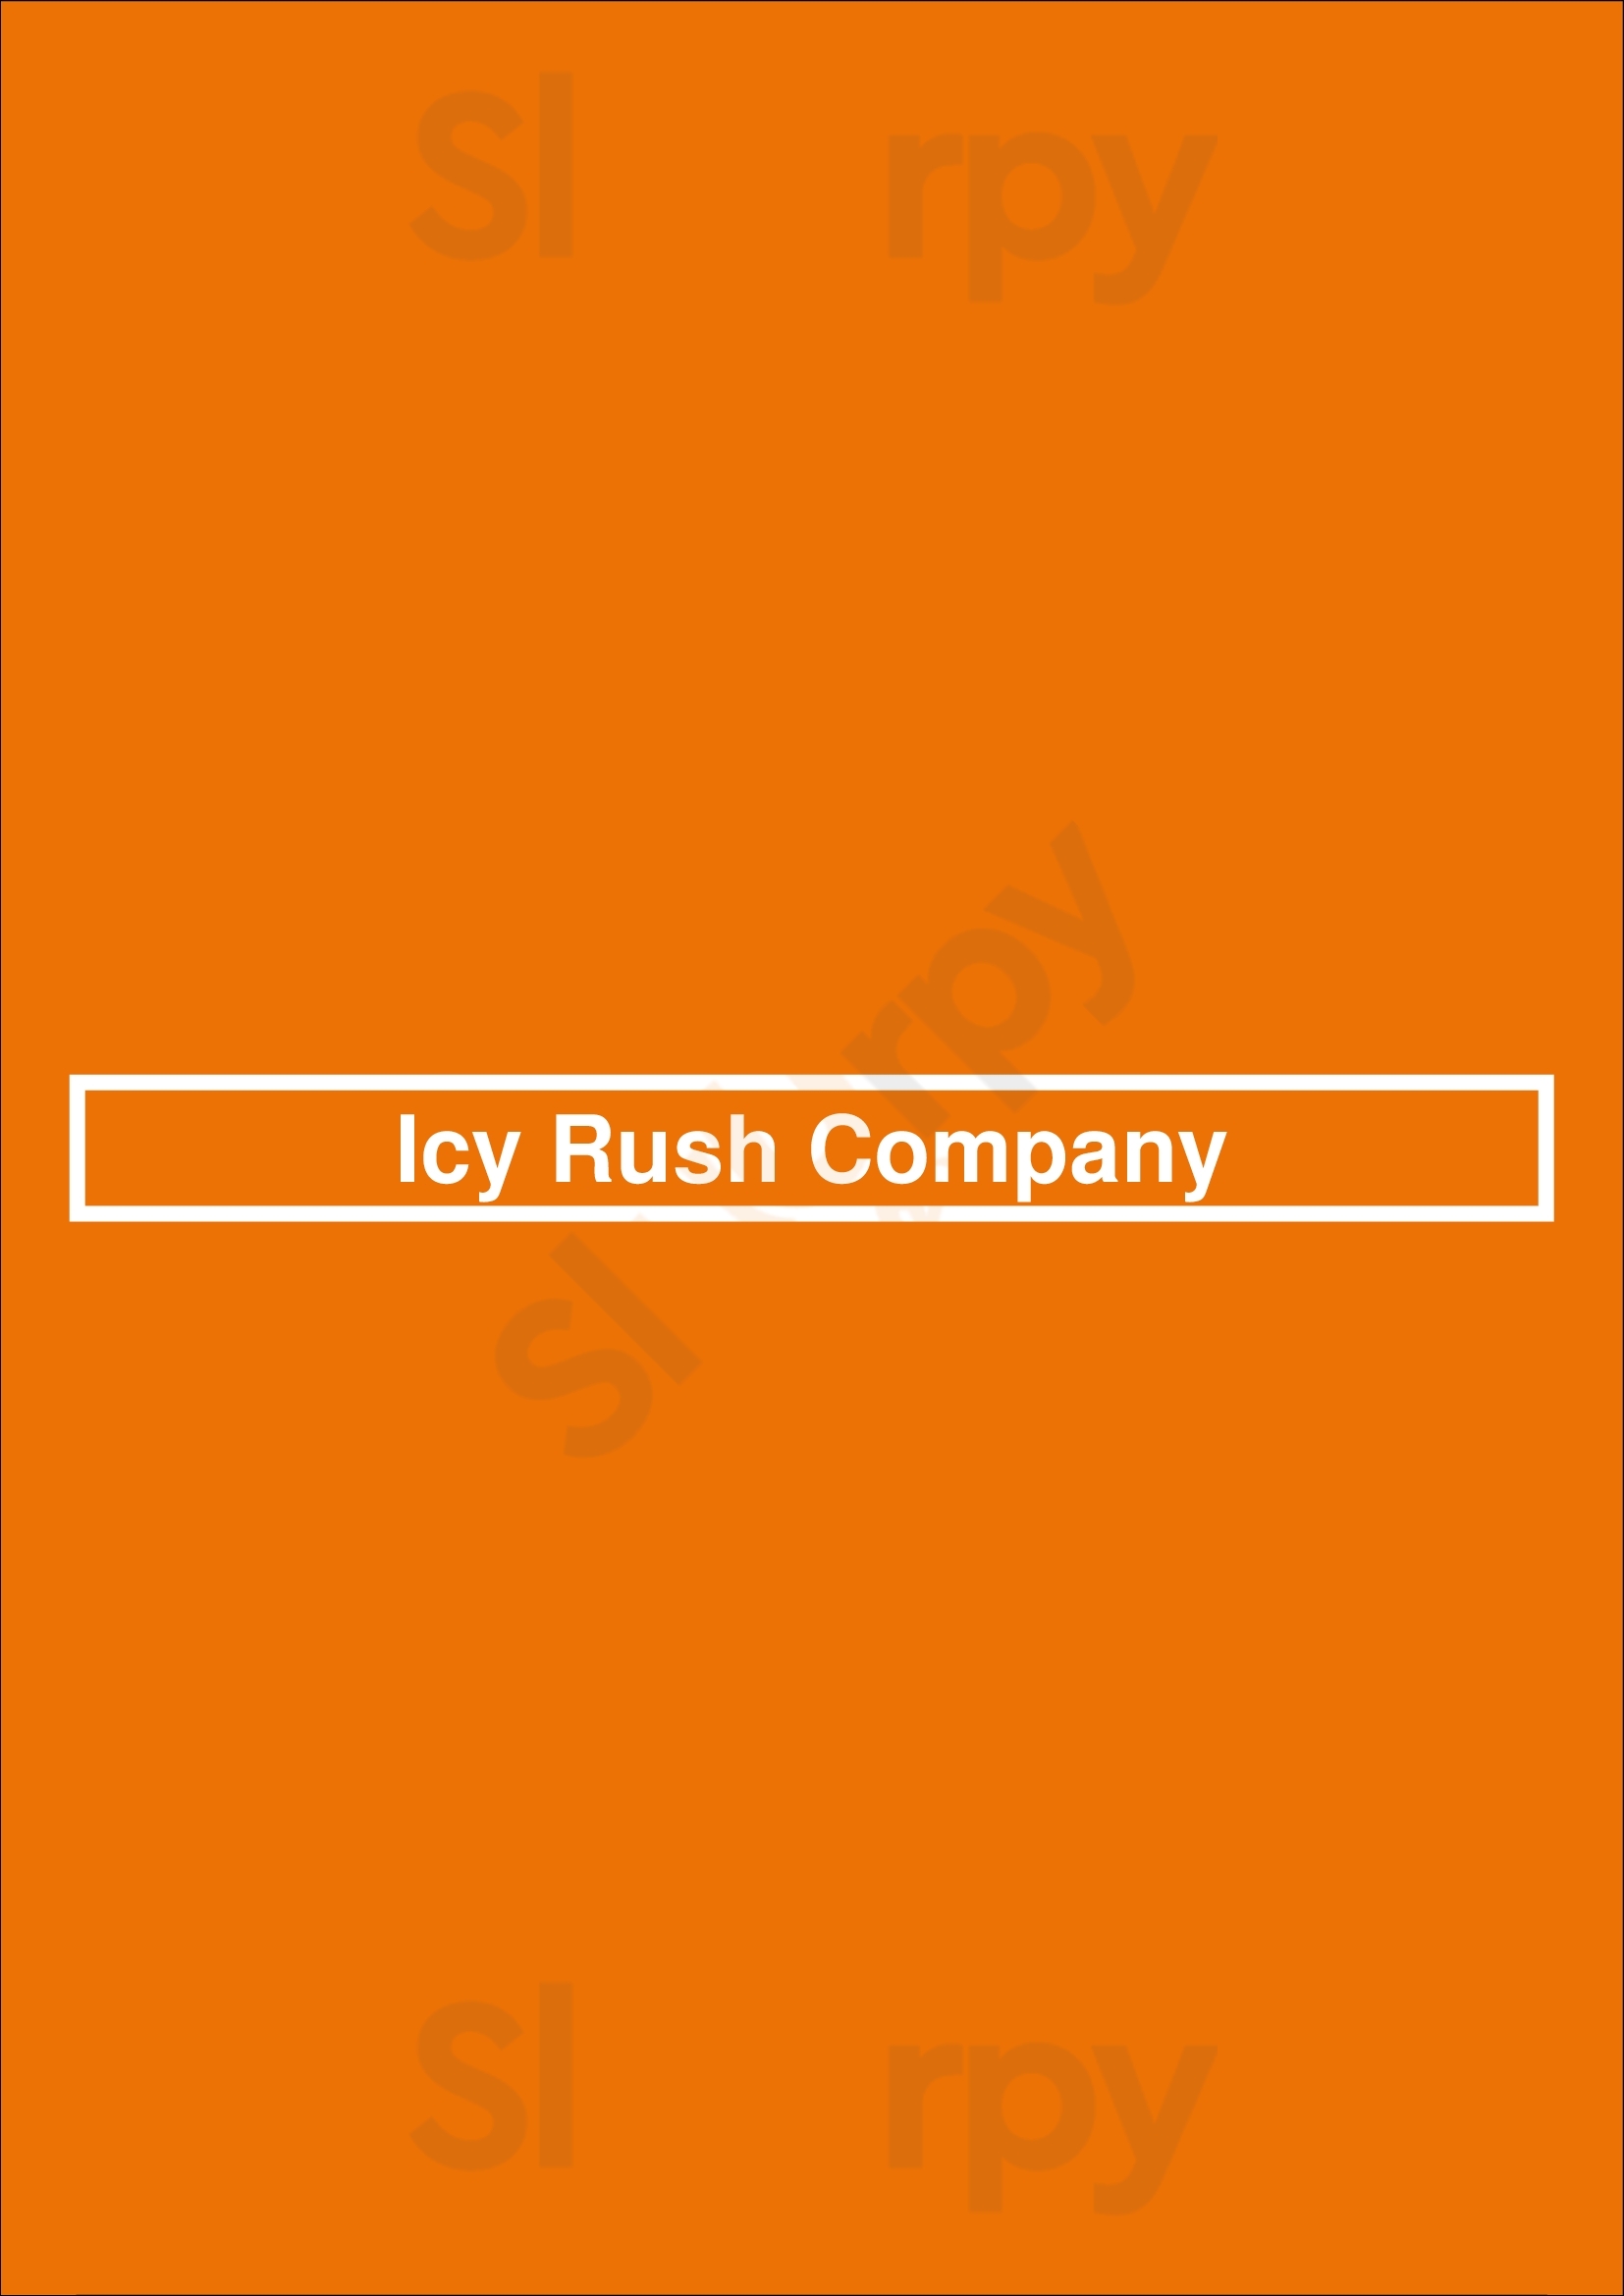 Icy Rush Company Los Angeles Menu - 1